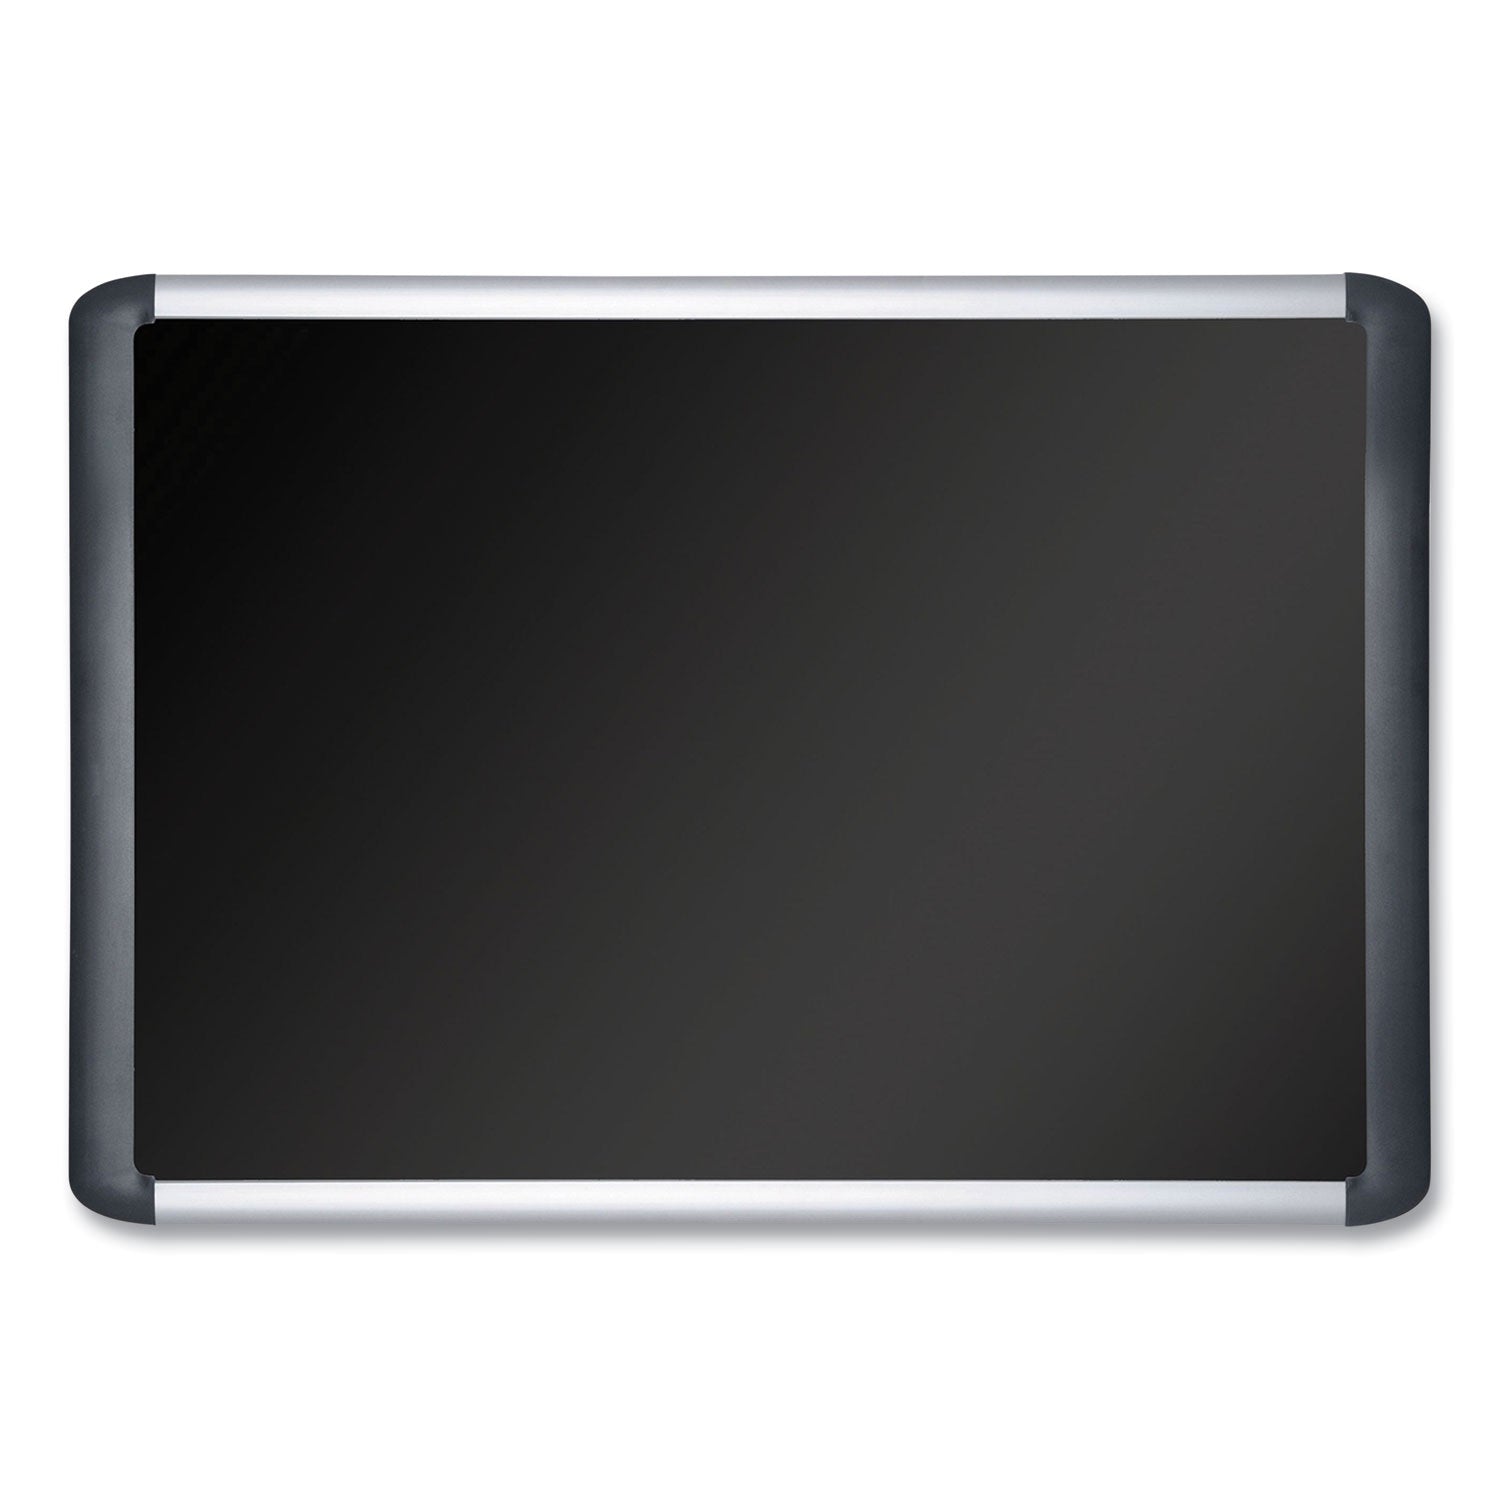 Soft-touch Bulletin Board, 72 x 48, Black Fabric Surface, Aluminum/Black Aluminum Frame - 